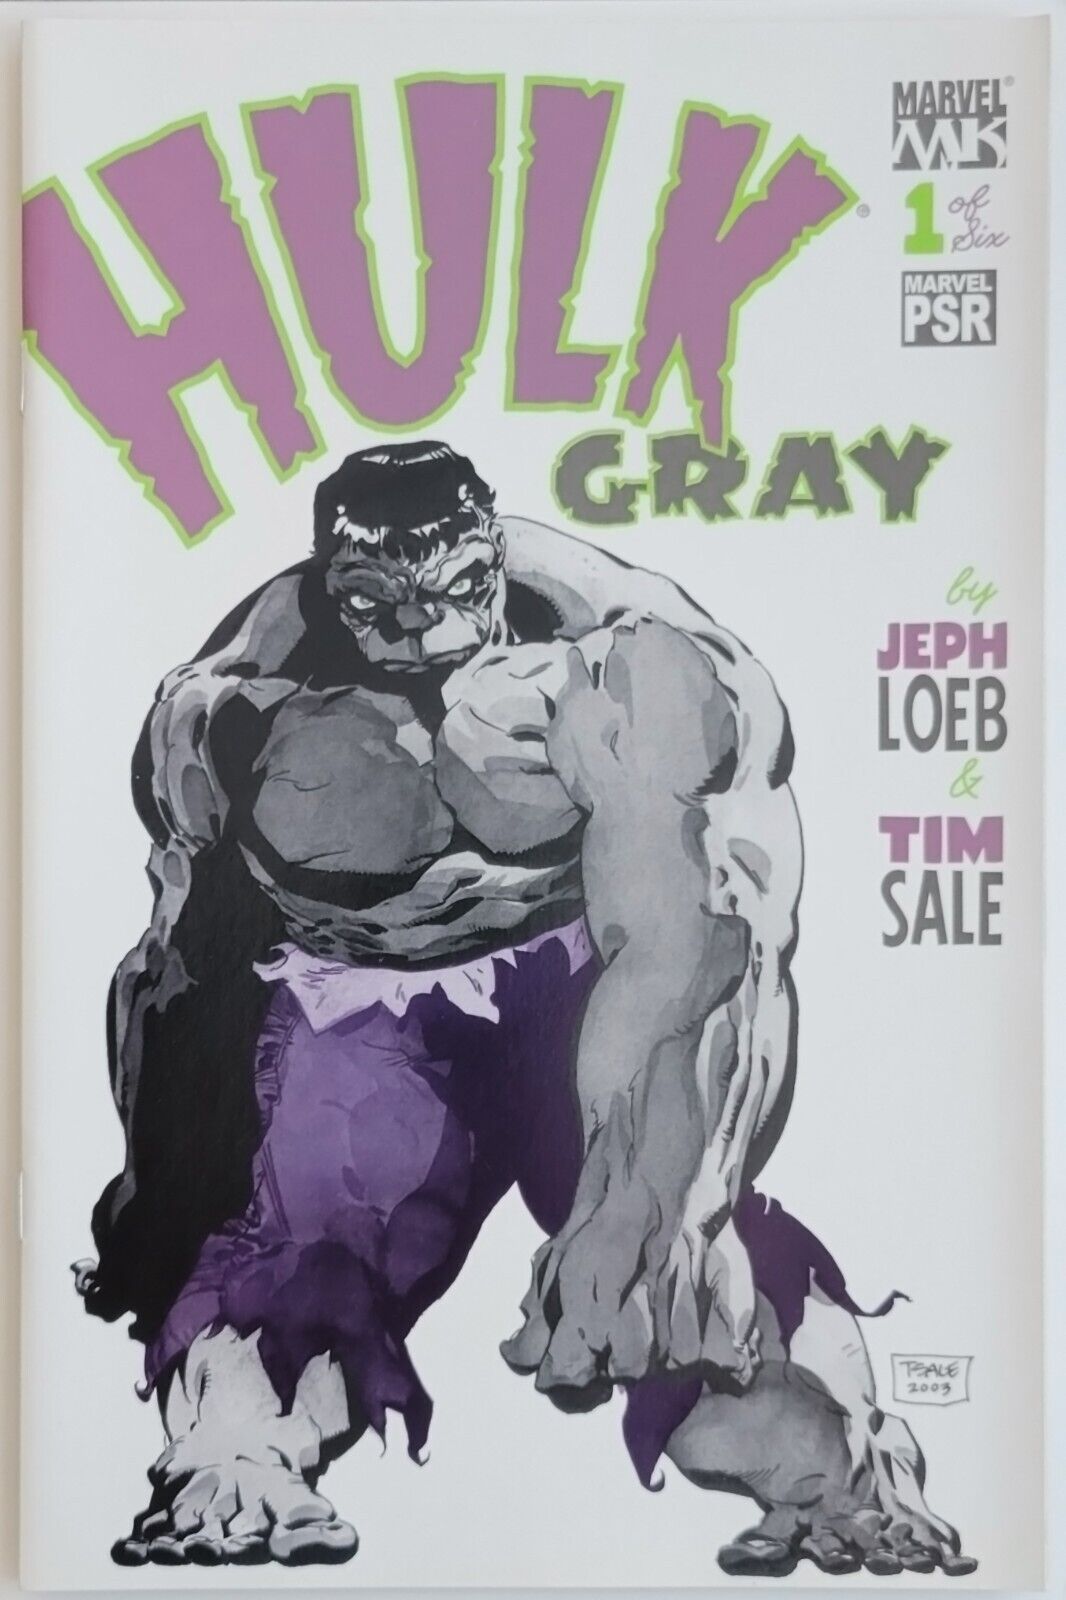 Hulk Gray #1 (2003) Vintage Origin of the Hulk Before He was Green